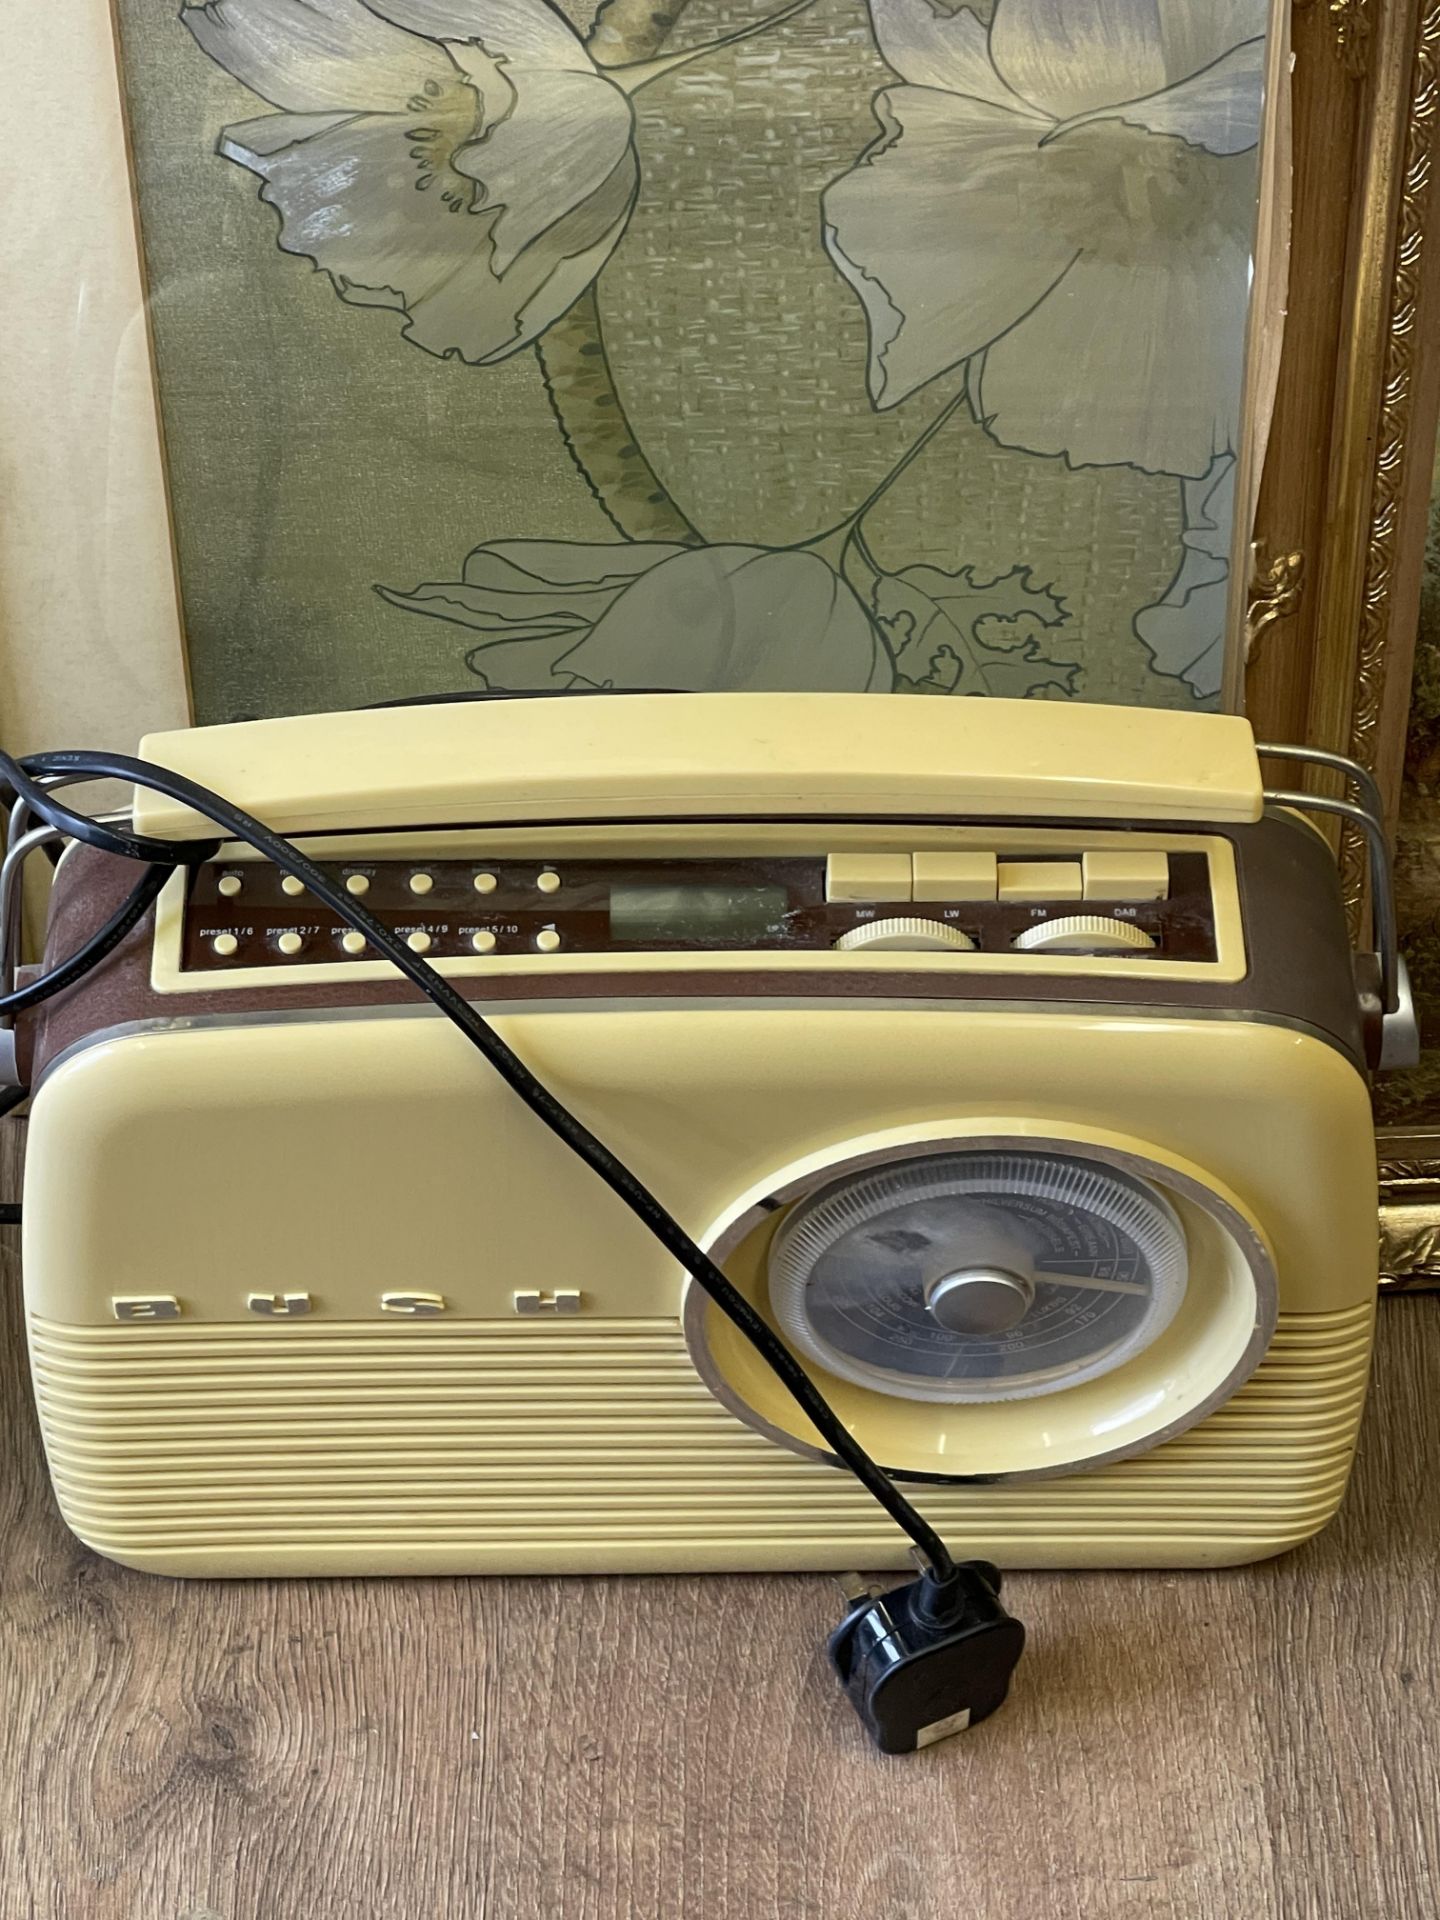 digital radio retro looking very old lost property - Image 3 of 3